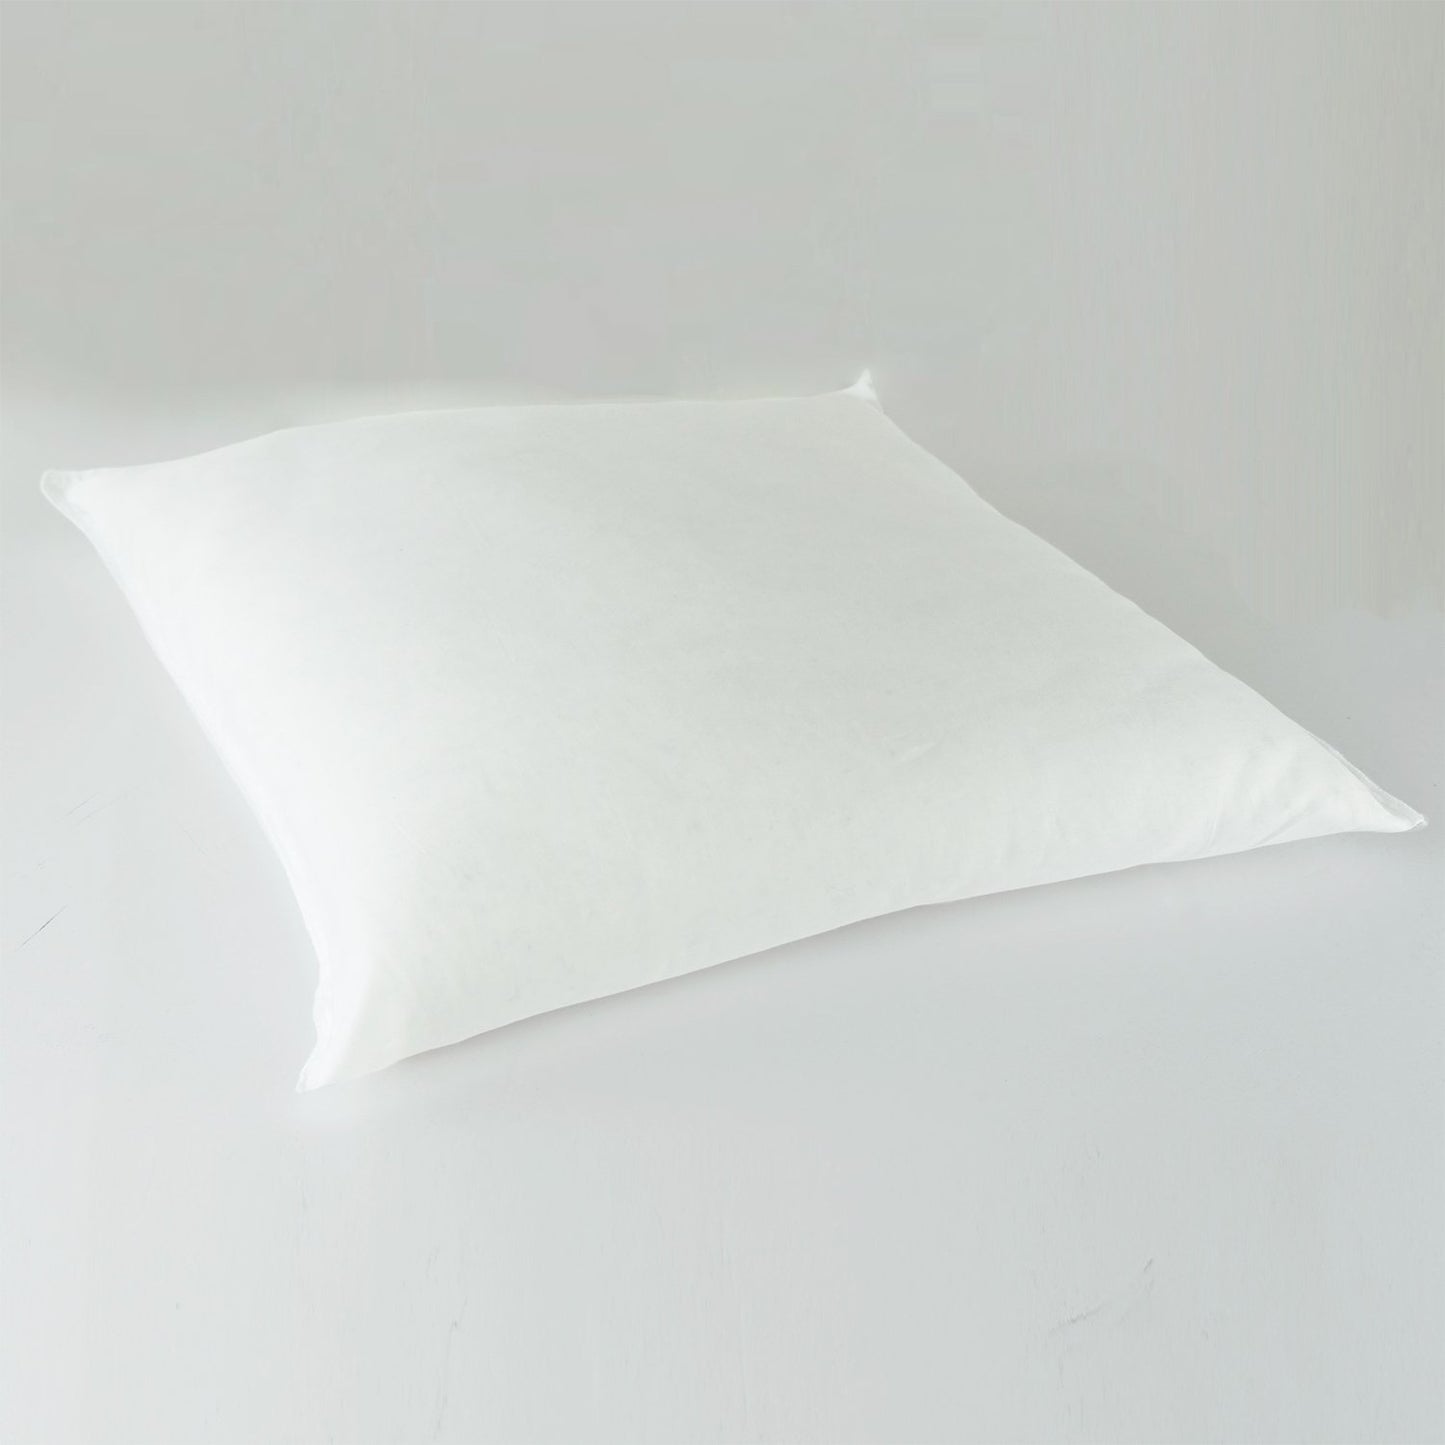 J-Life Ya Gasuri Navy Zabuton Floor Pillow_Pillows & Shams_Zabuton Floor Pillows_100% Cotton_Reversible_Handmade